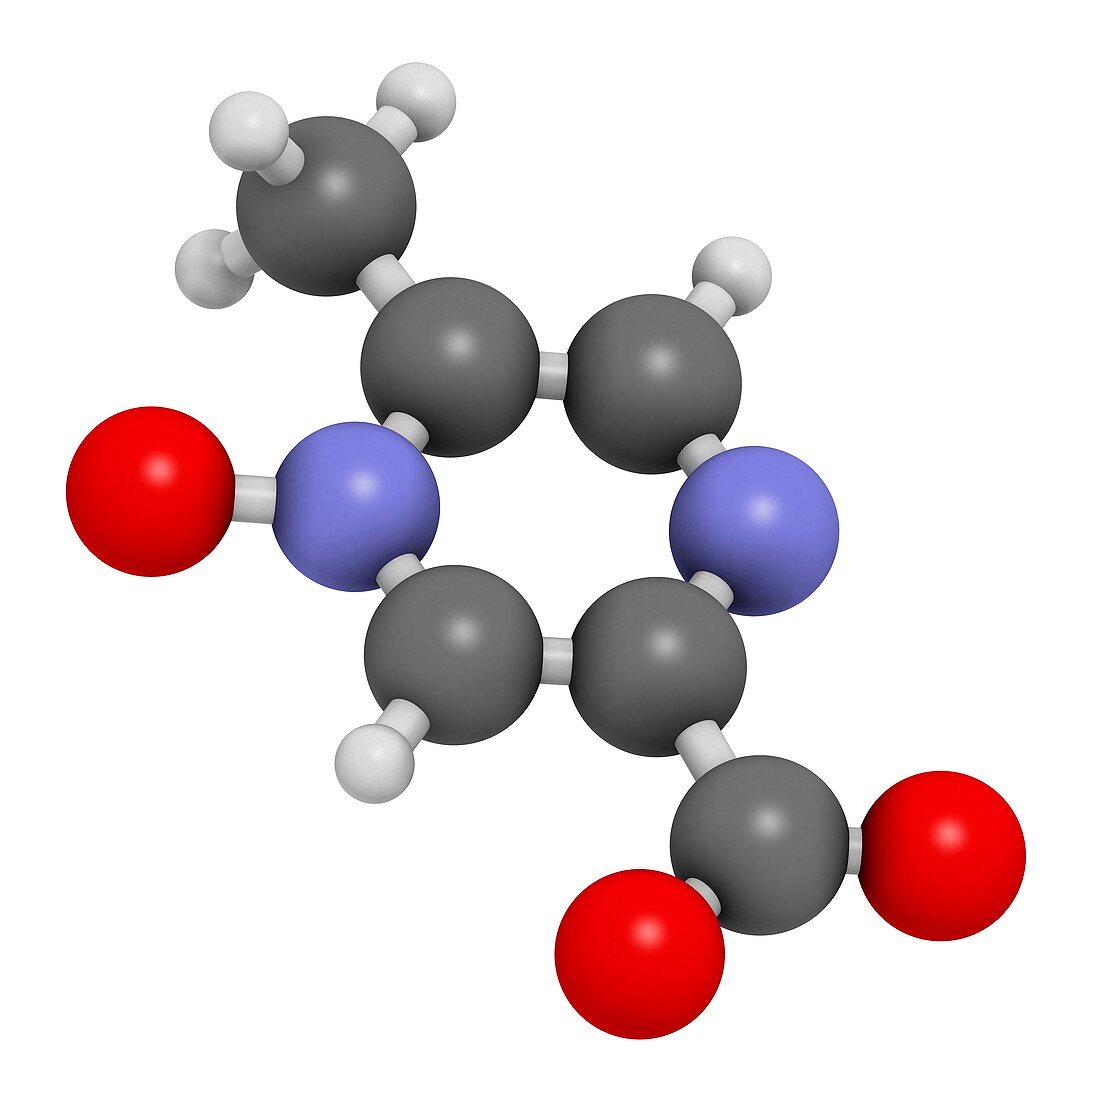 Acipimox hypertriglyceridemia drug molecule